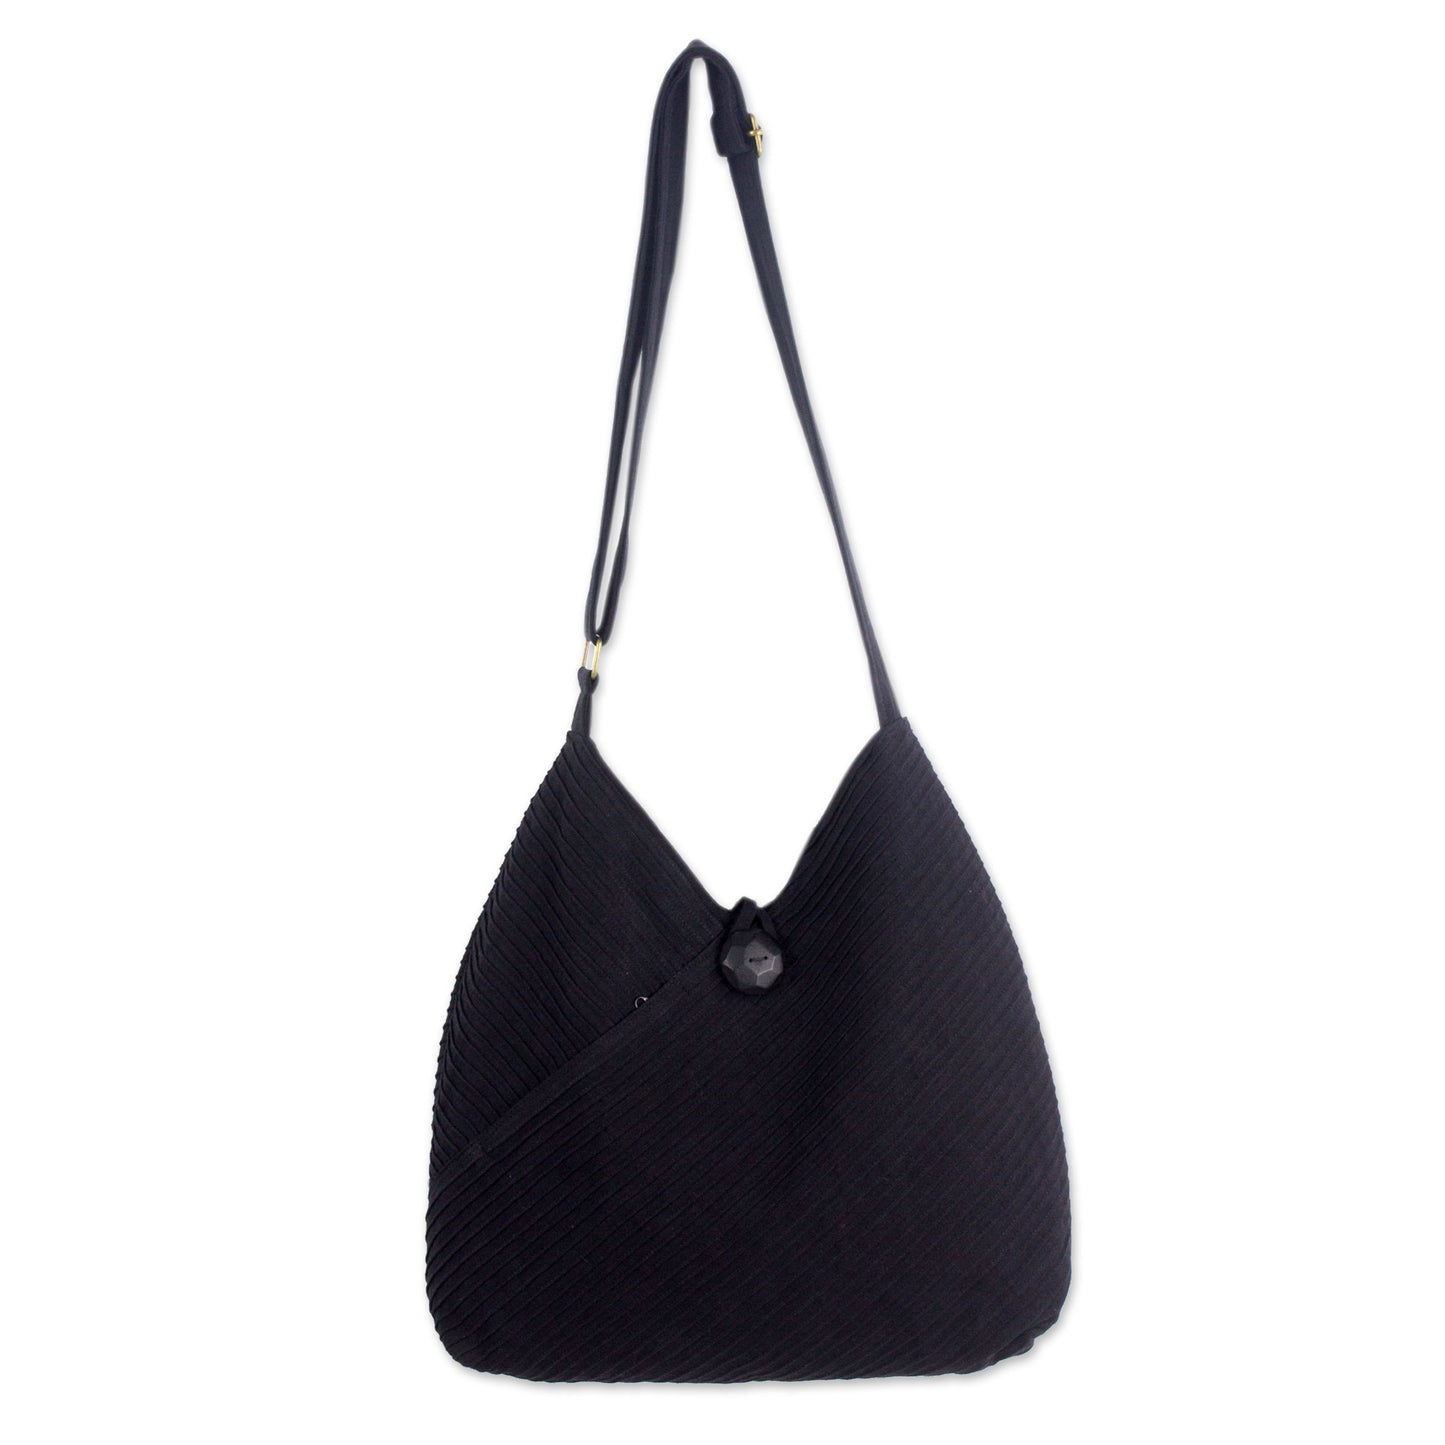 Surreal Black Handcrafted Cotton Hobo Bag